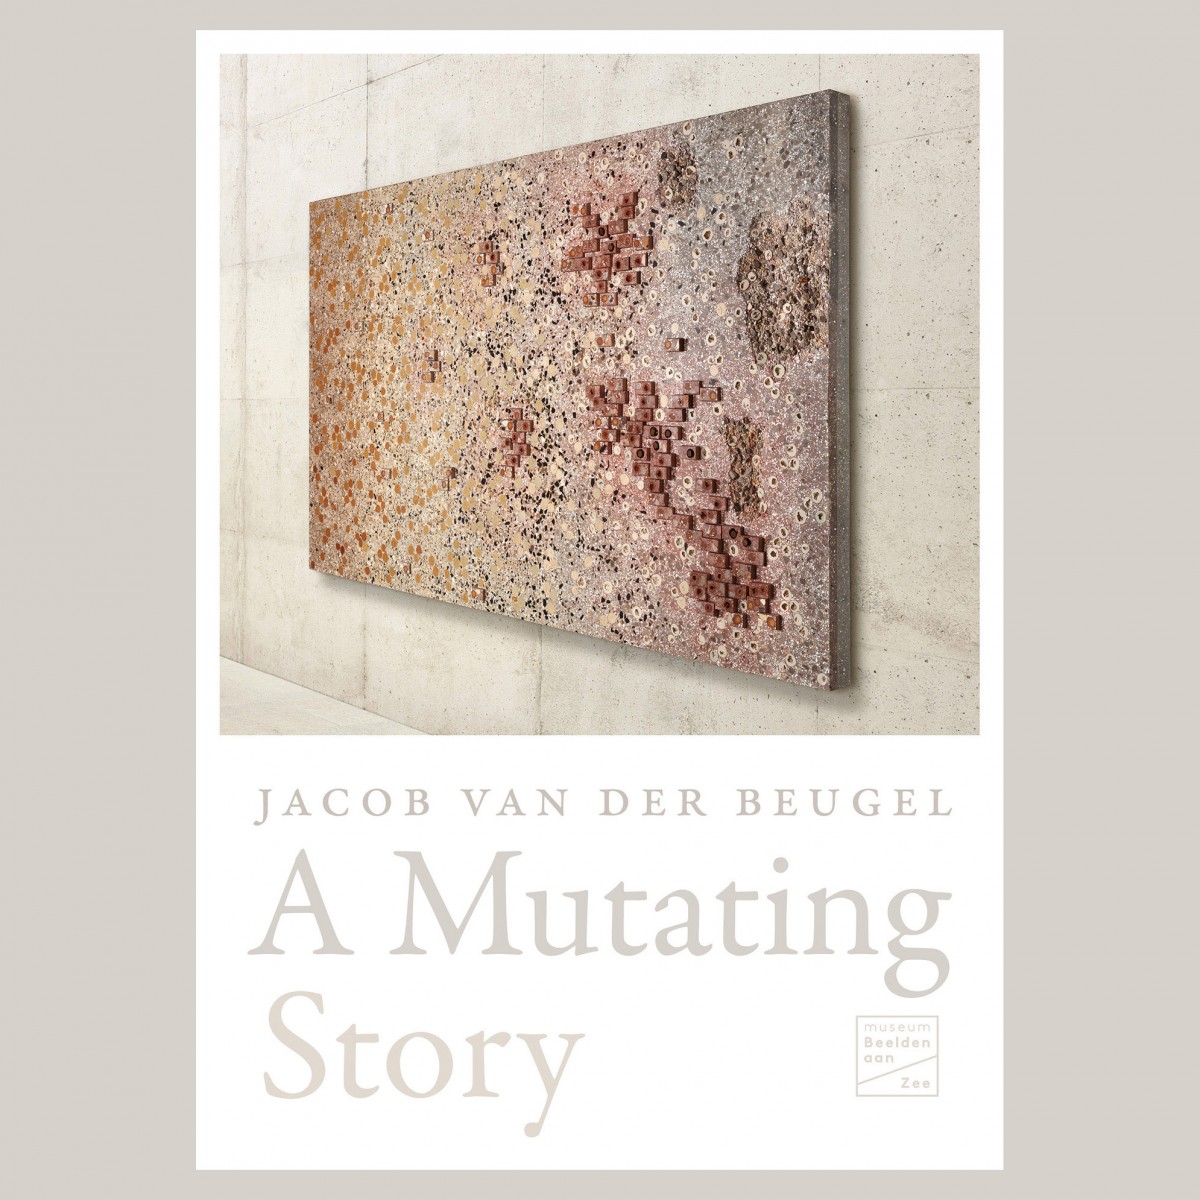 New catalogue for sale - Jacob Van Der Beugel